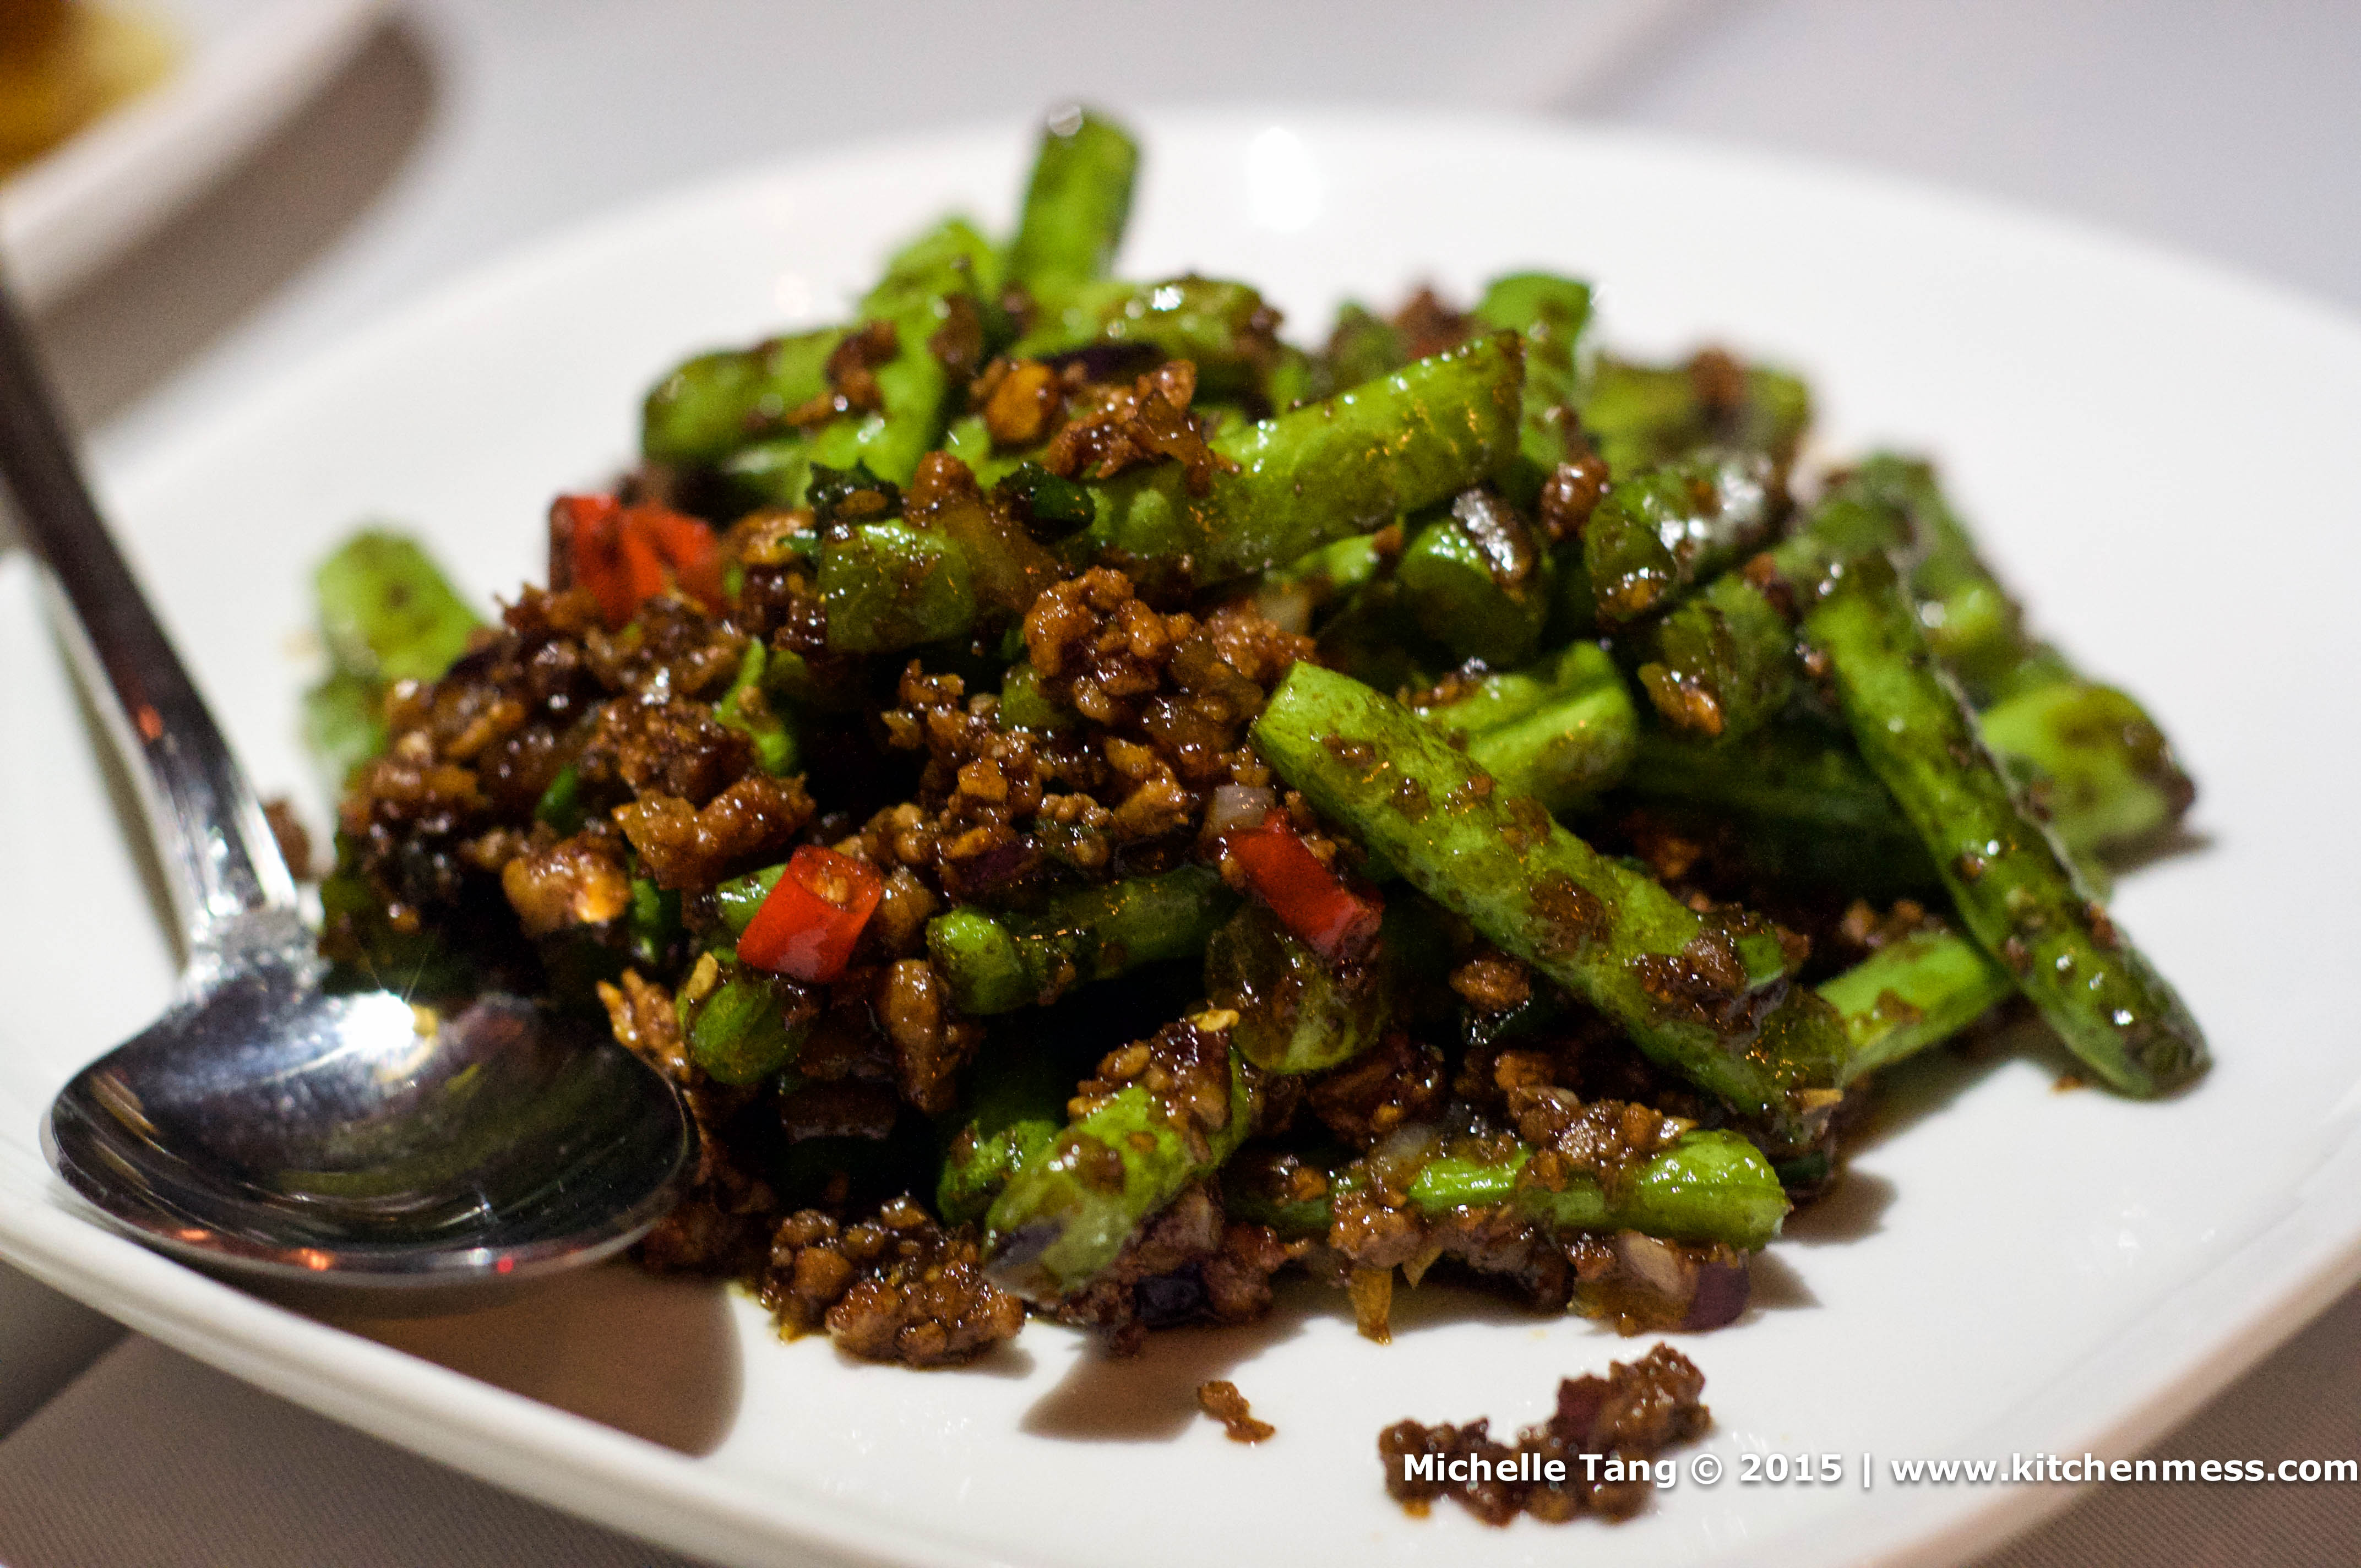 Sichuan-style green beans